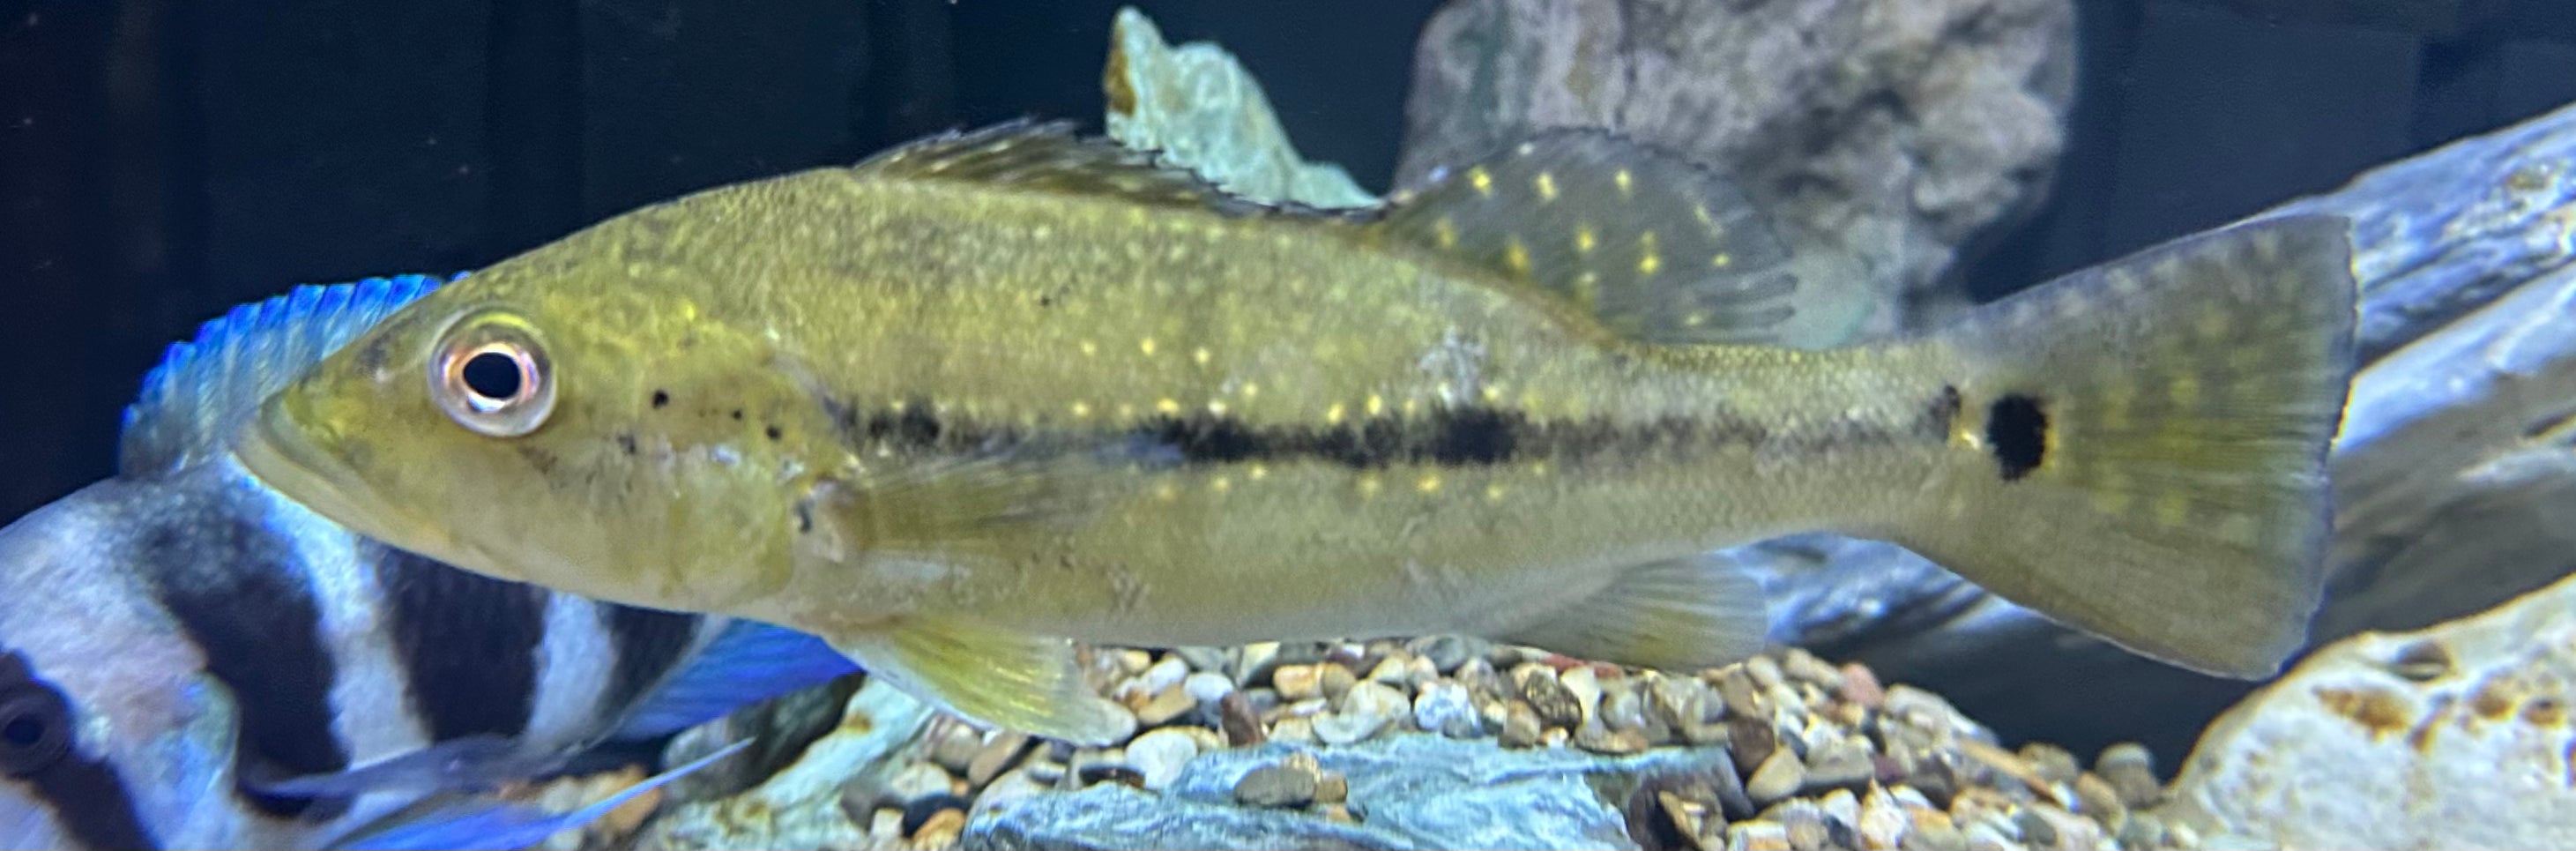 Xingu Peacock Bass (6-7”)